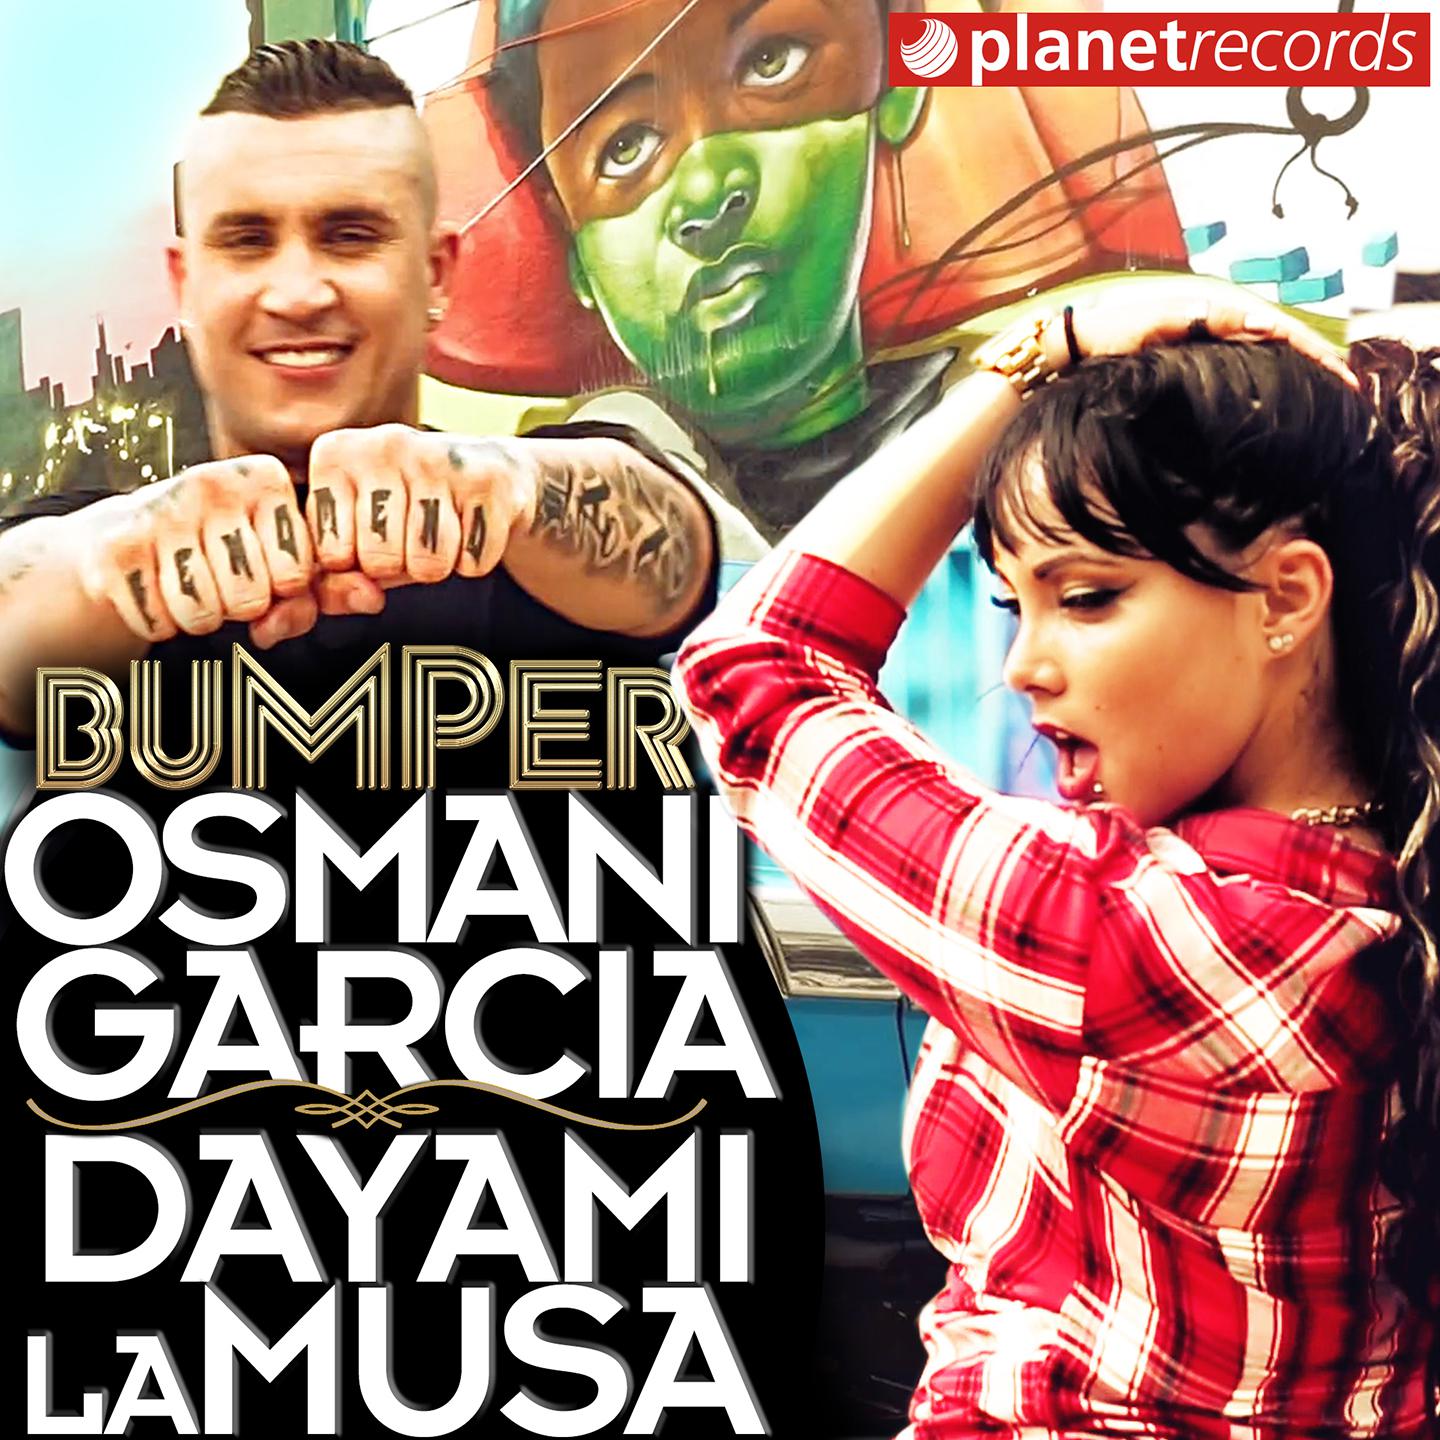 Osmani Garcia “La Voz” - Bumper